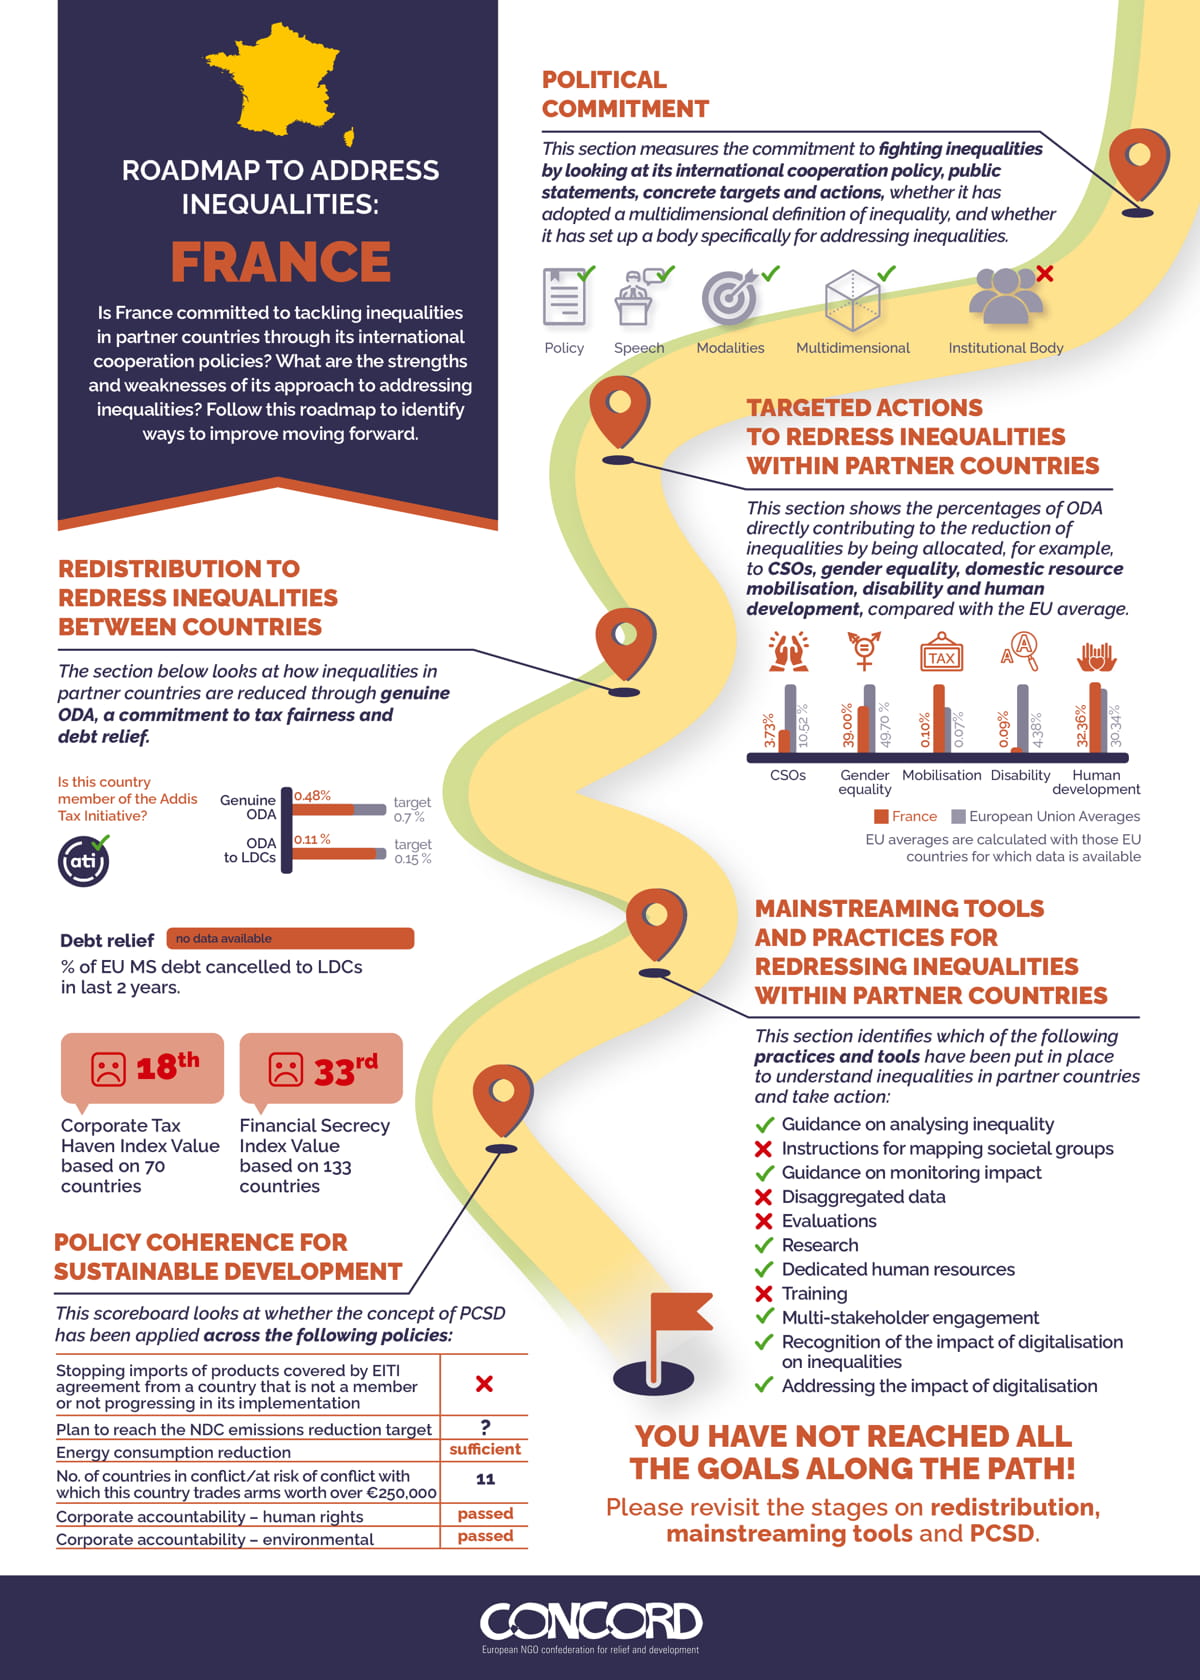 Roadmap to Address Inequalities: France